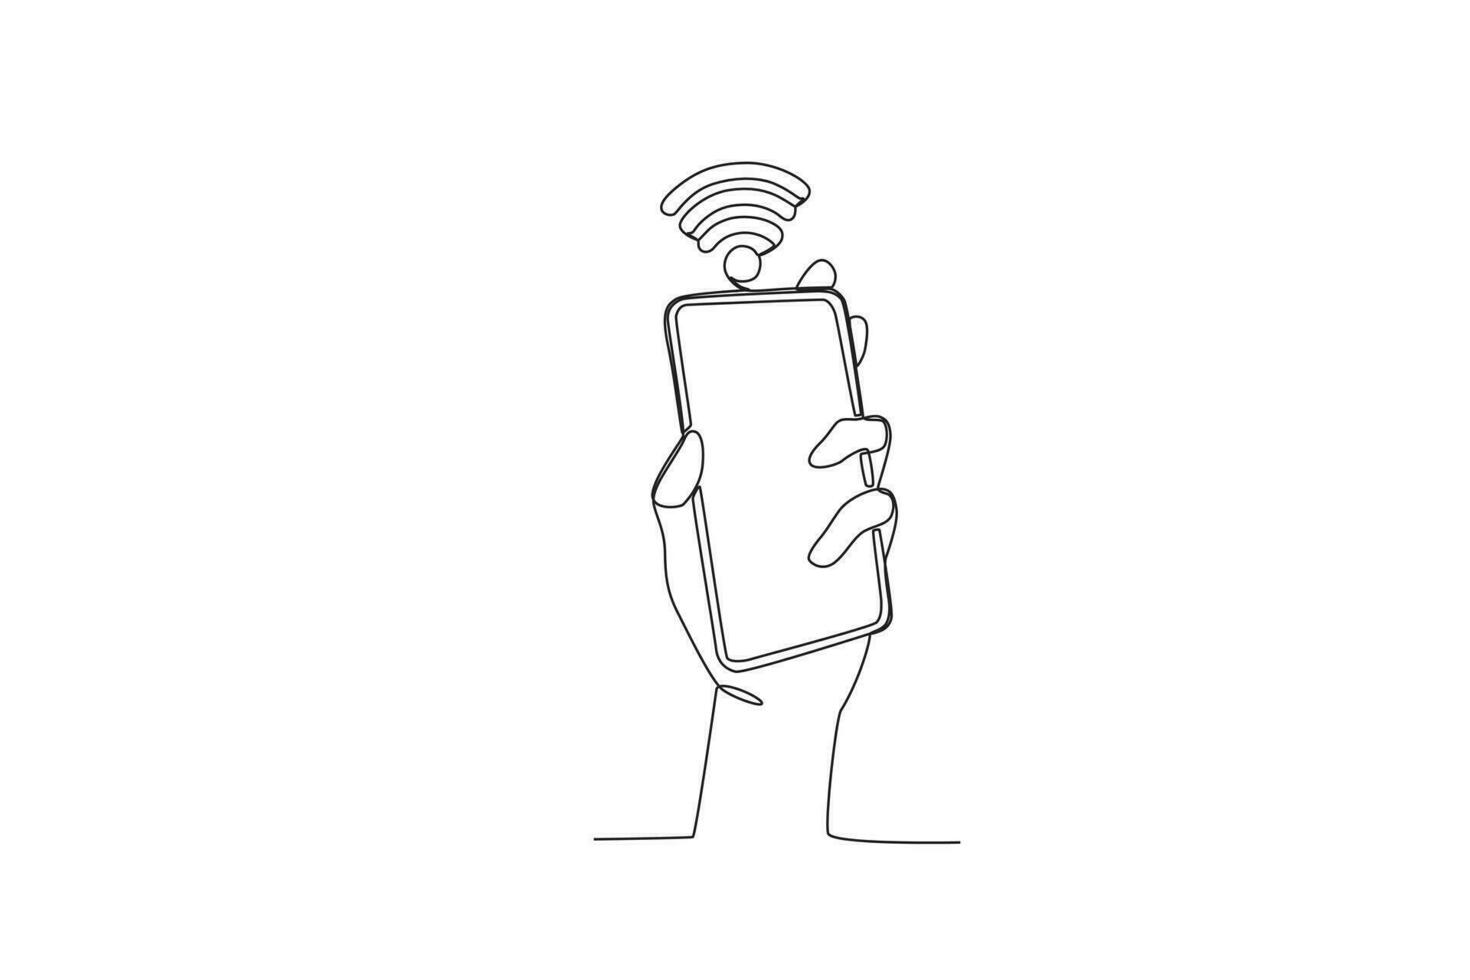 un mano participación un Teléfono móvil con un Wifi red vector